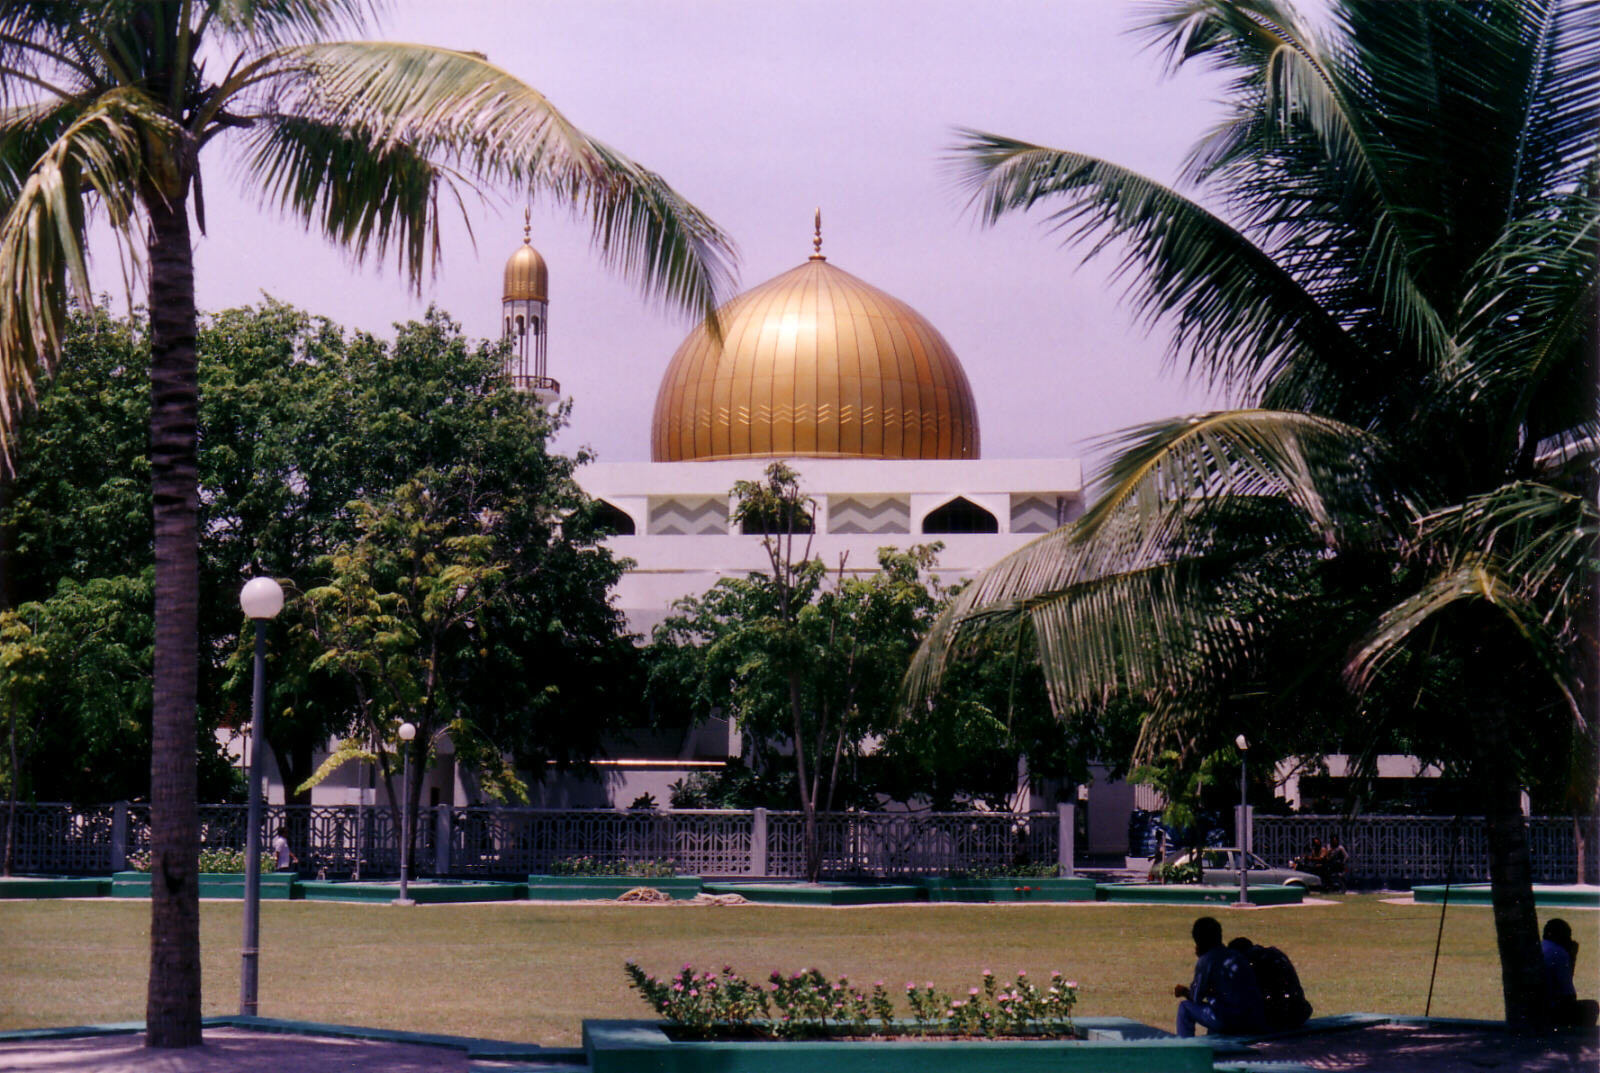 Islamic University and central park, Mal, Maldives